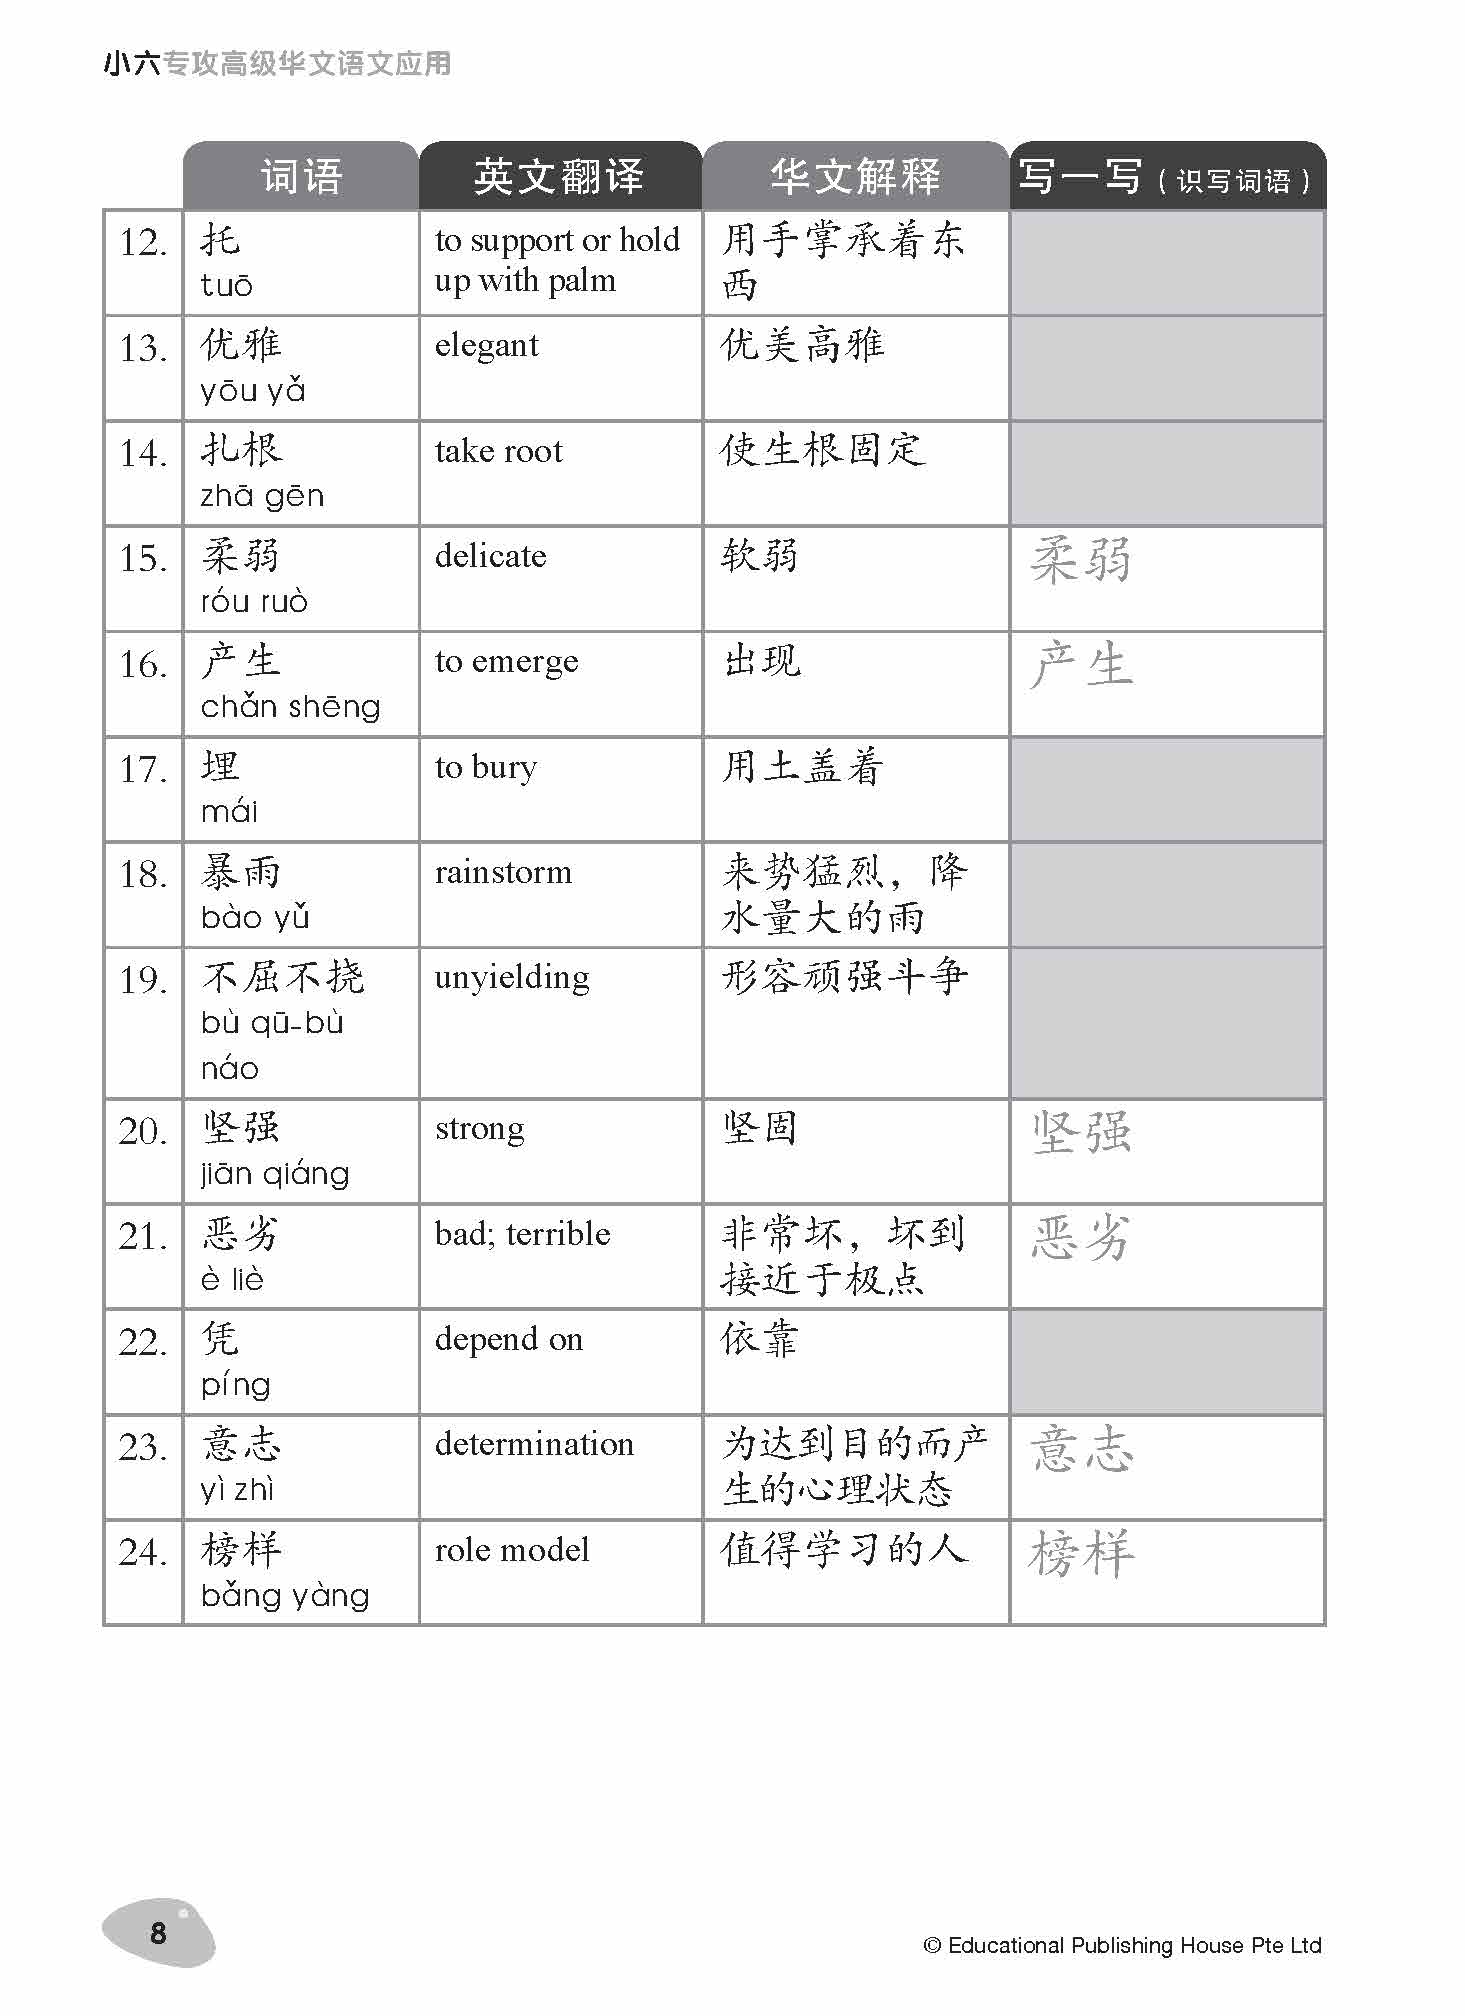 Primary 6 Tackling Higher Chinese Language Usage 专攻高级华文语文应用